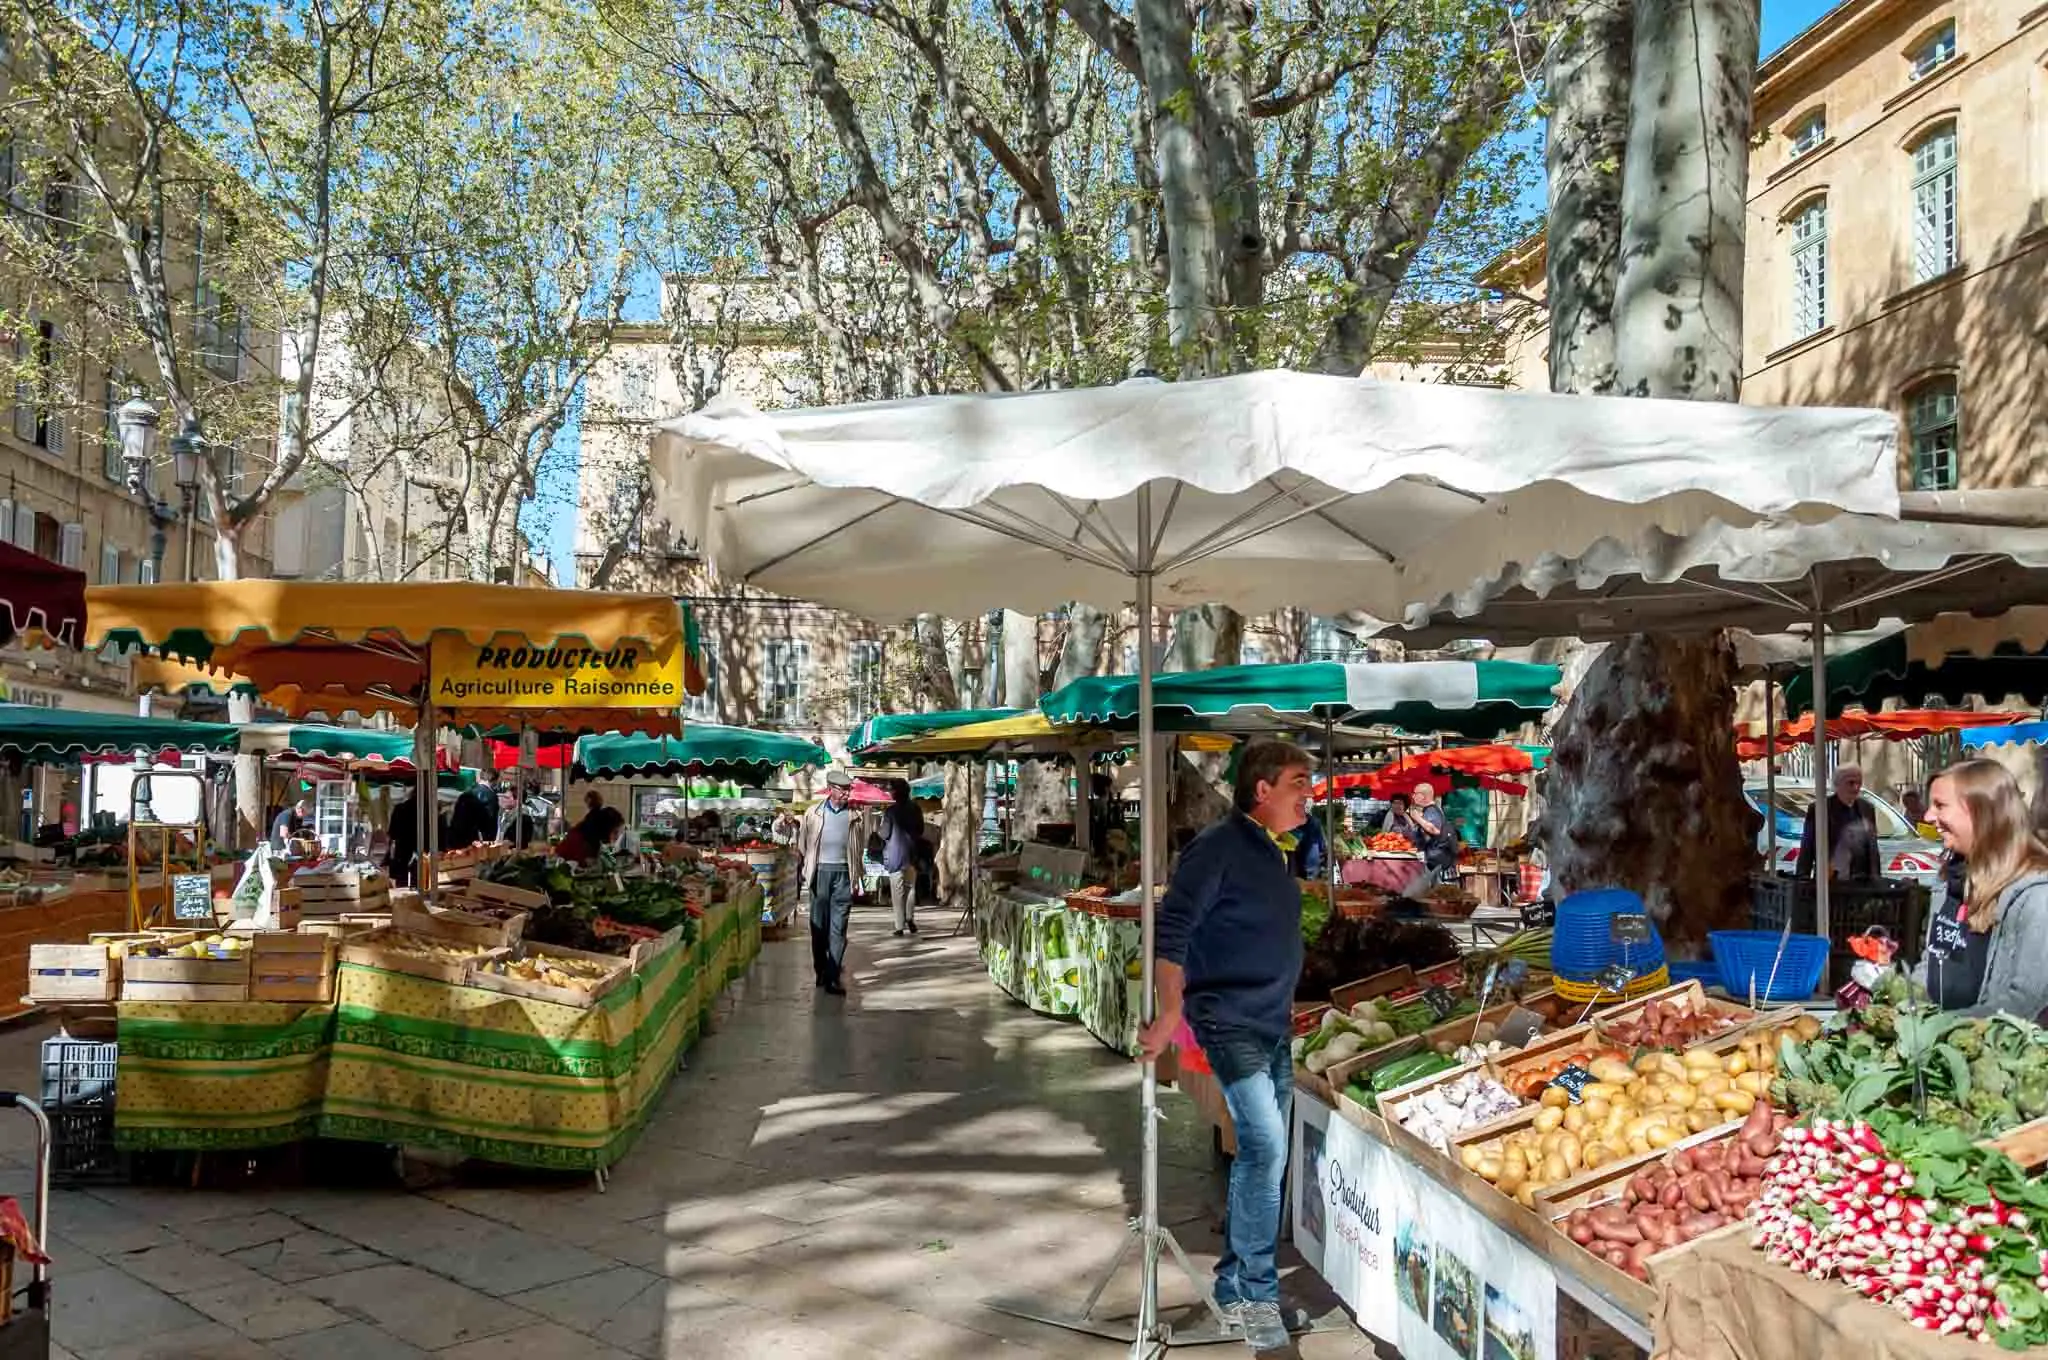 Produce vendors in a city square